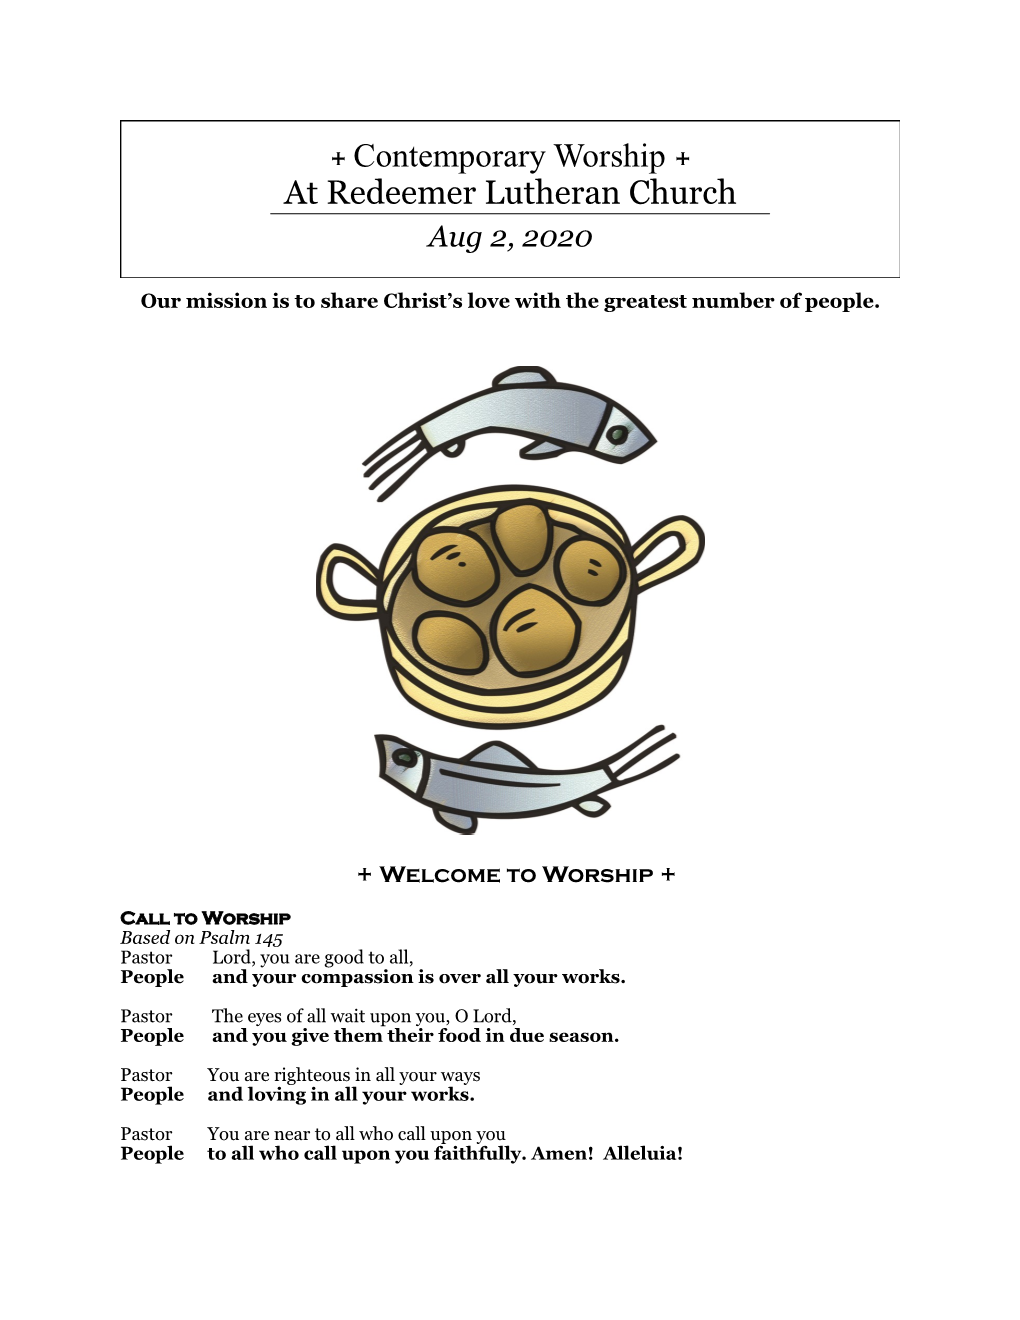 + Contemporary Worship + at Redeemer Lutheran Church Aug 2, 2020